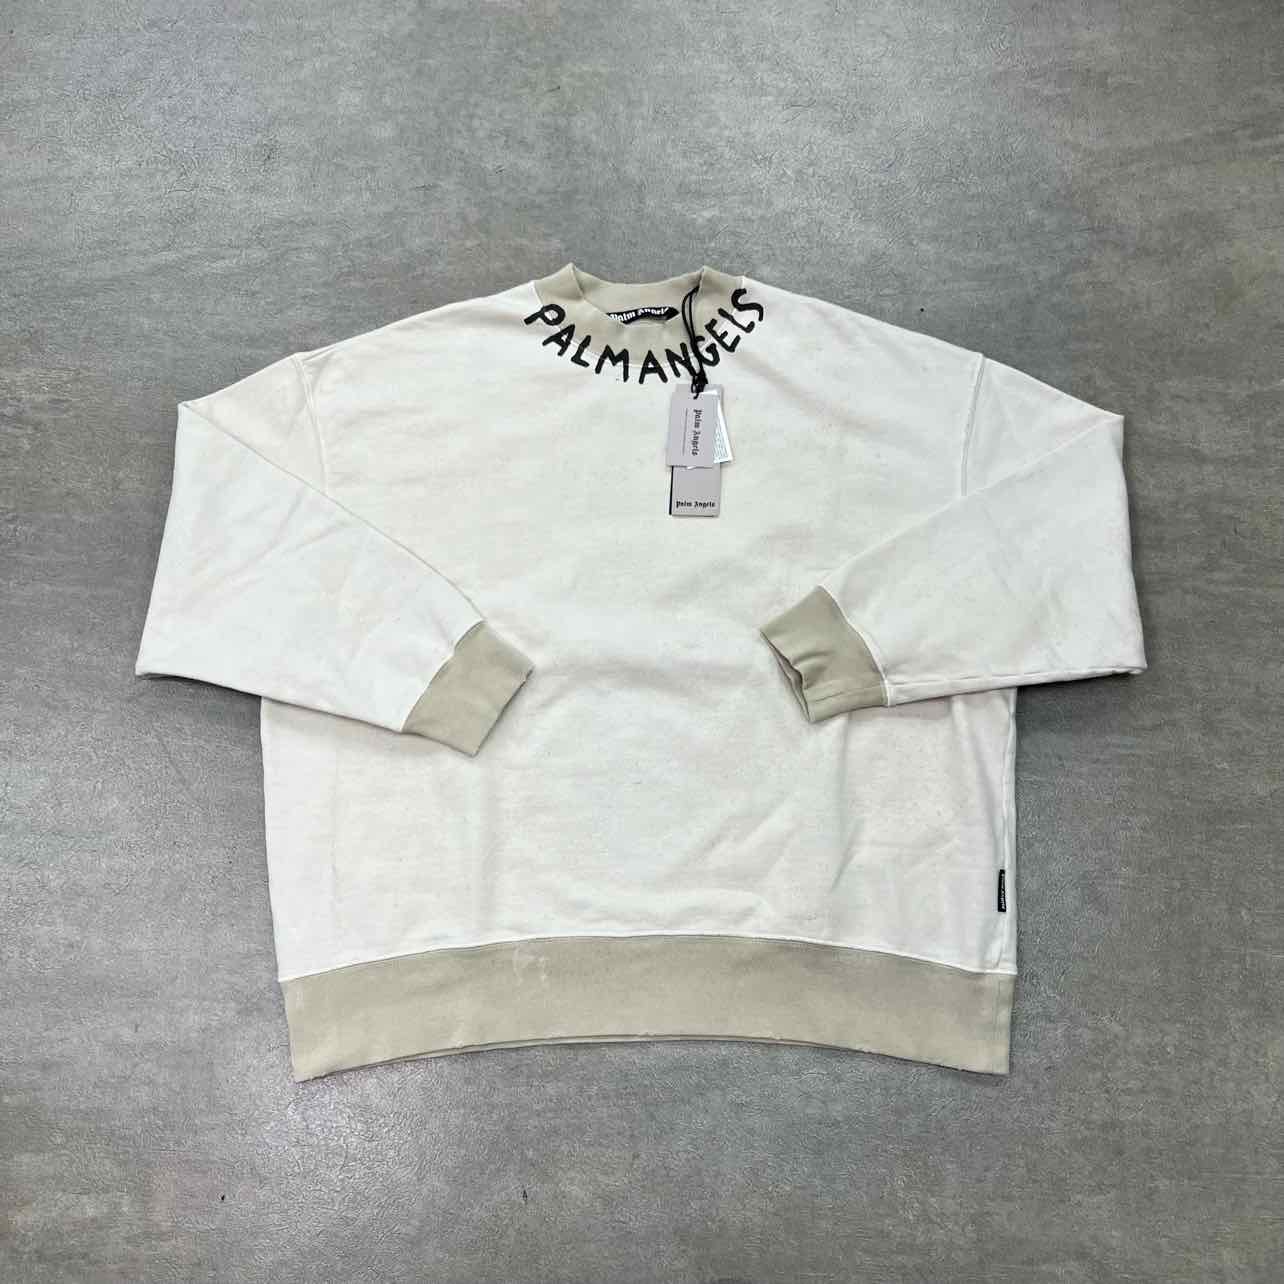 Palm Angels Crewneck Sweater &quot;SEASONAL LOGO&quot; Cream New Size XL